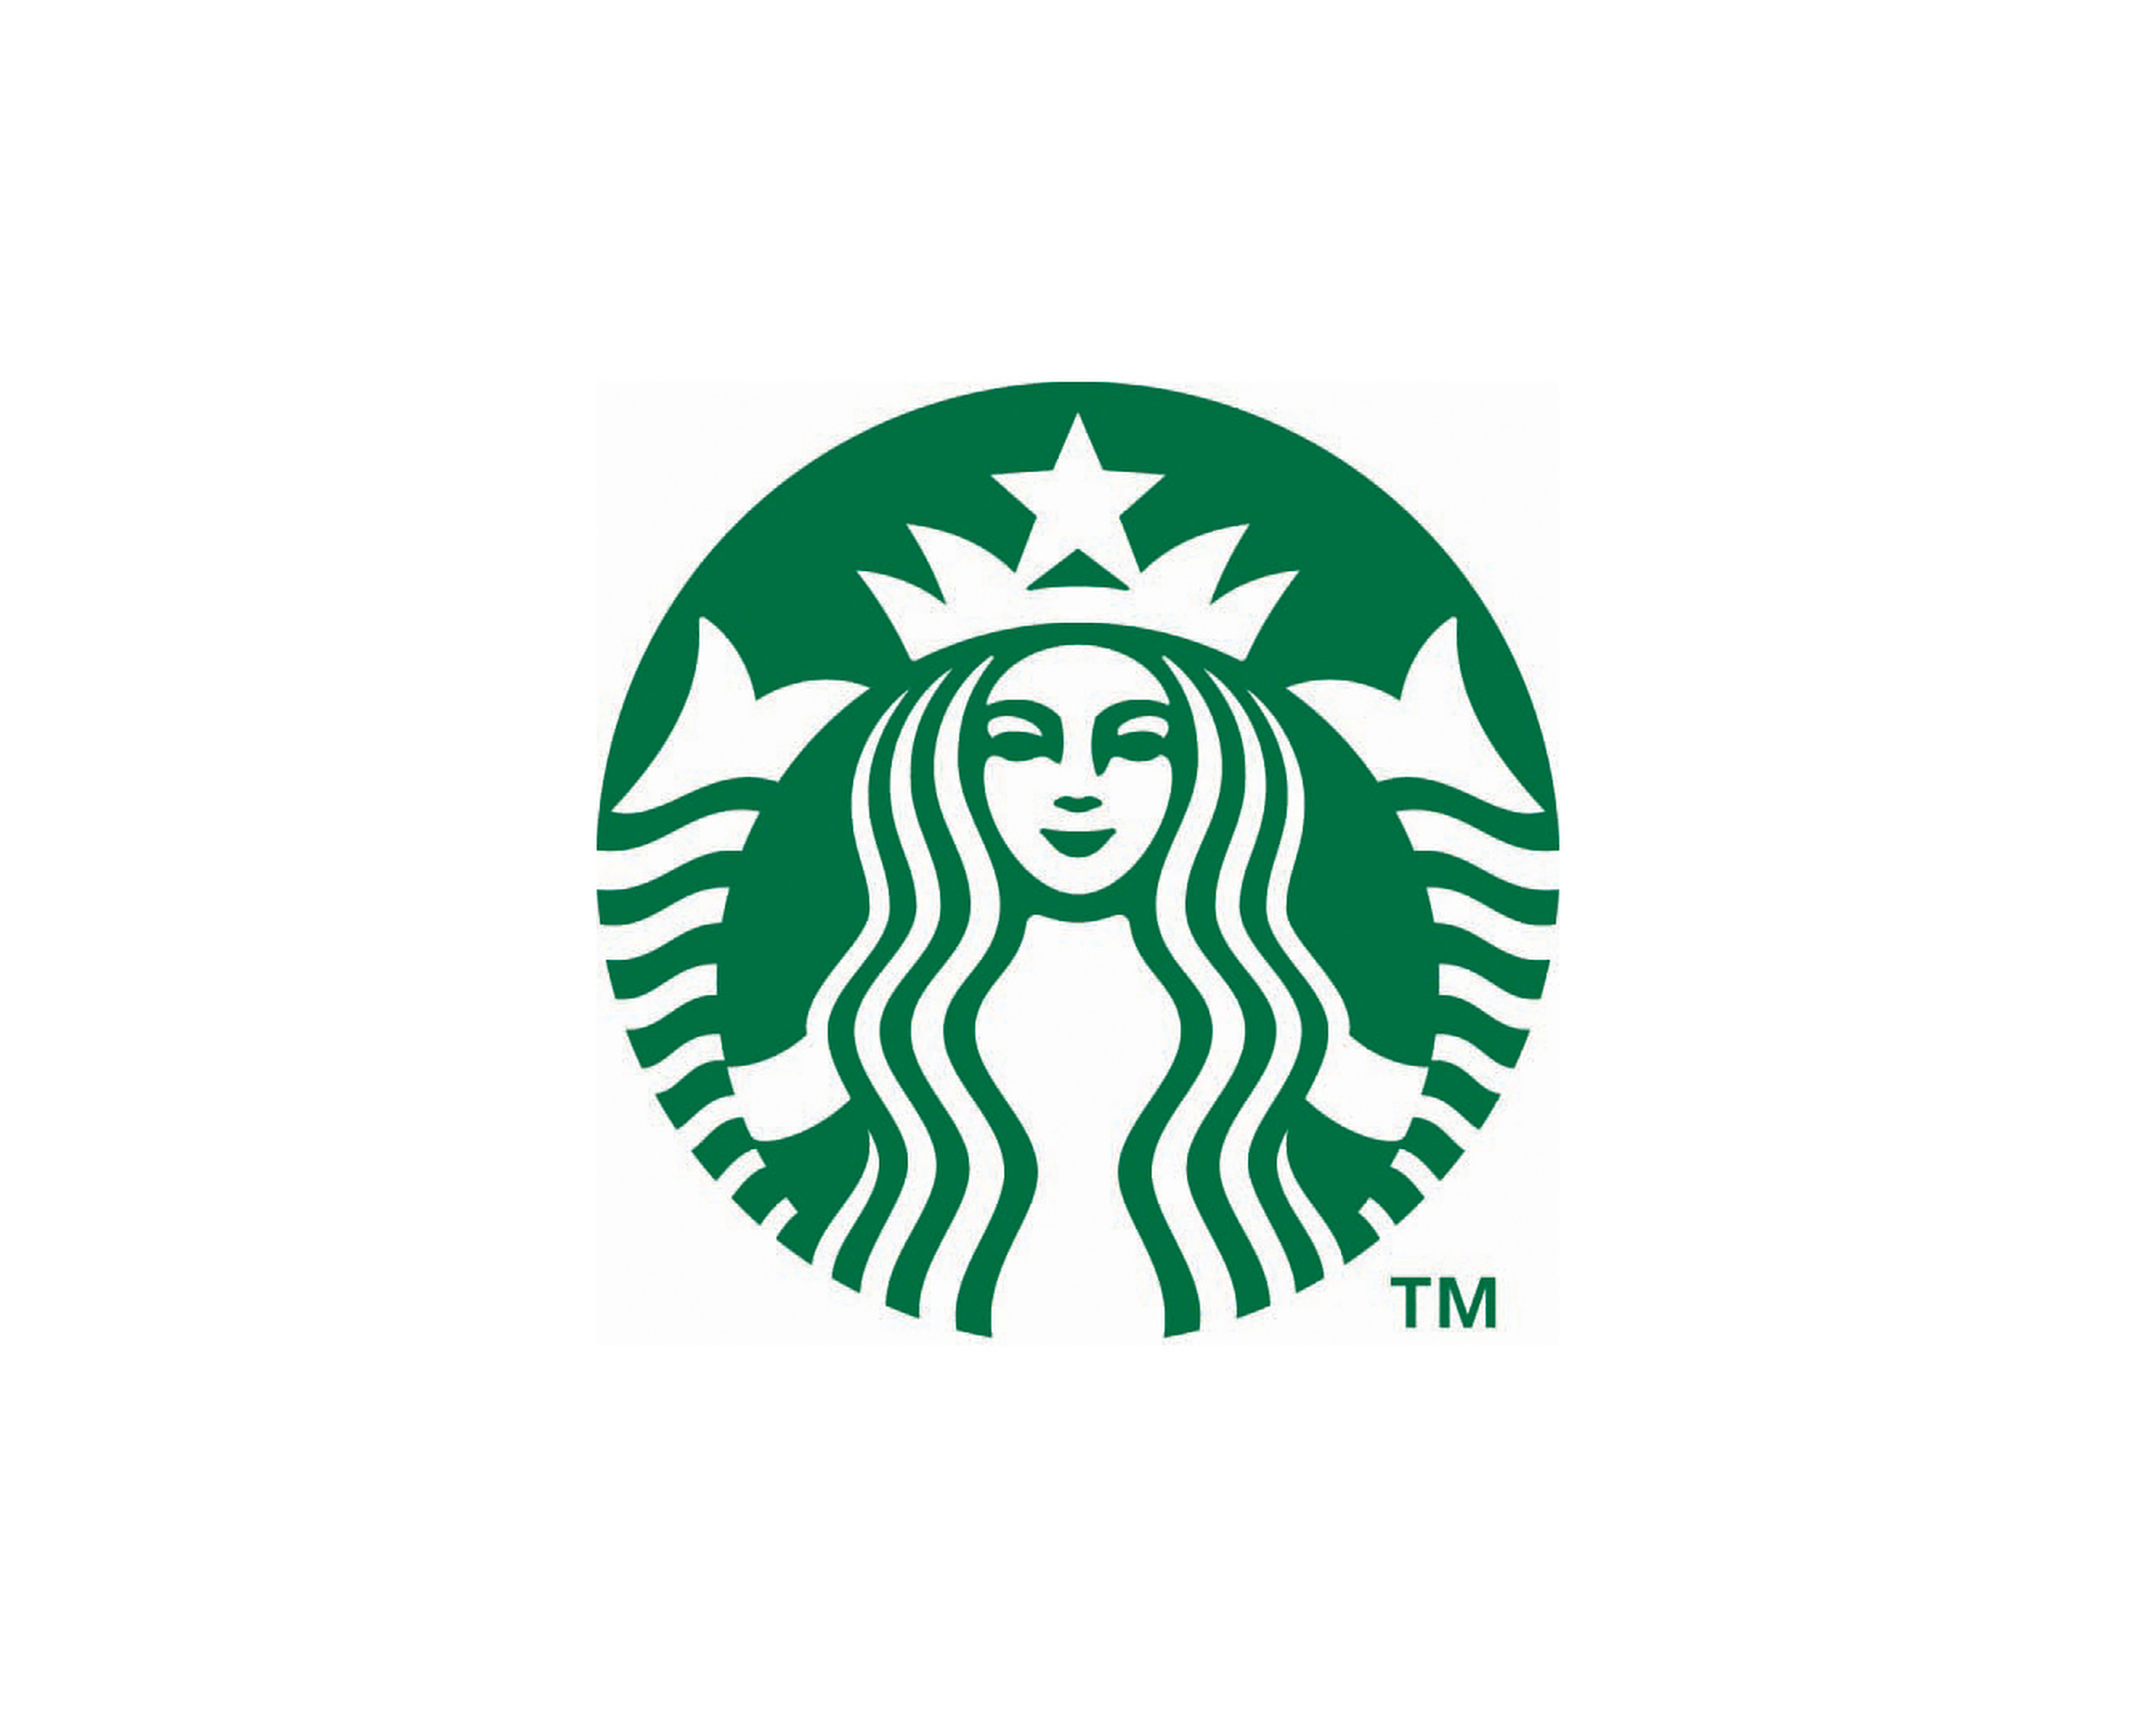 Starbucks Coffee Company Starbucks Coffee Company